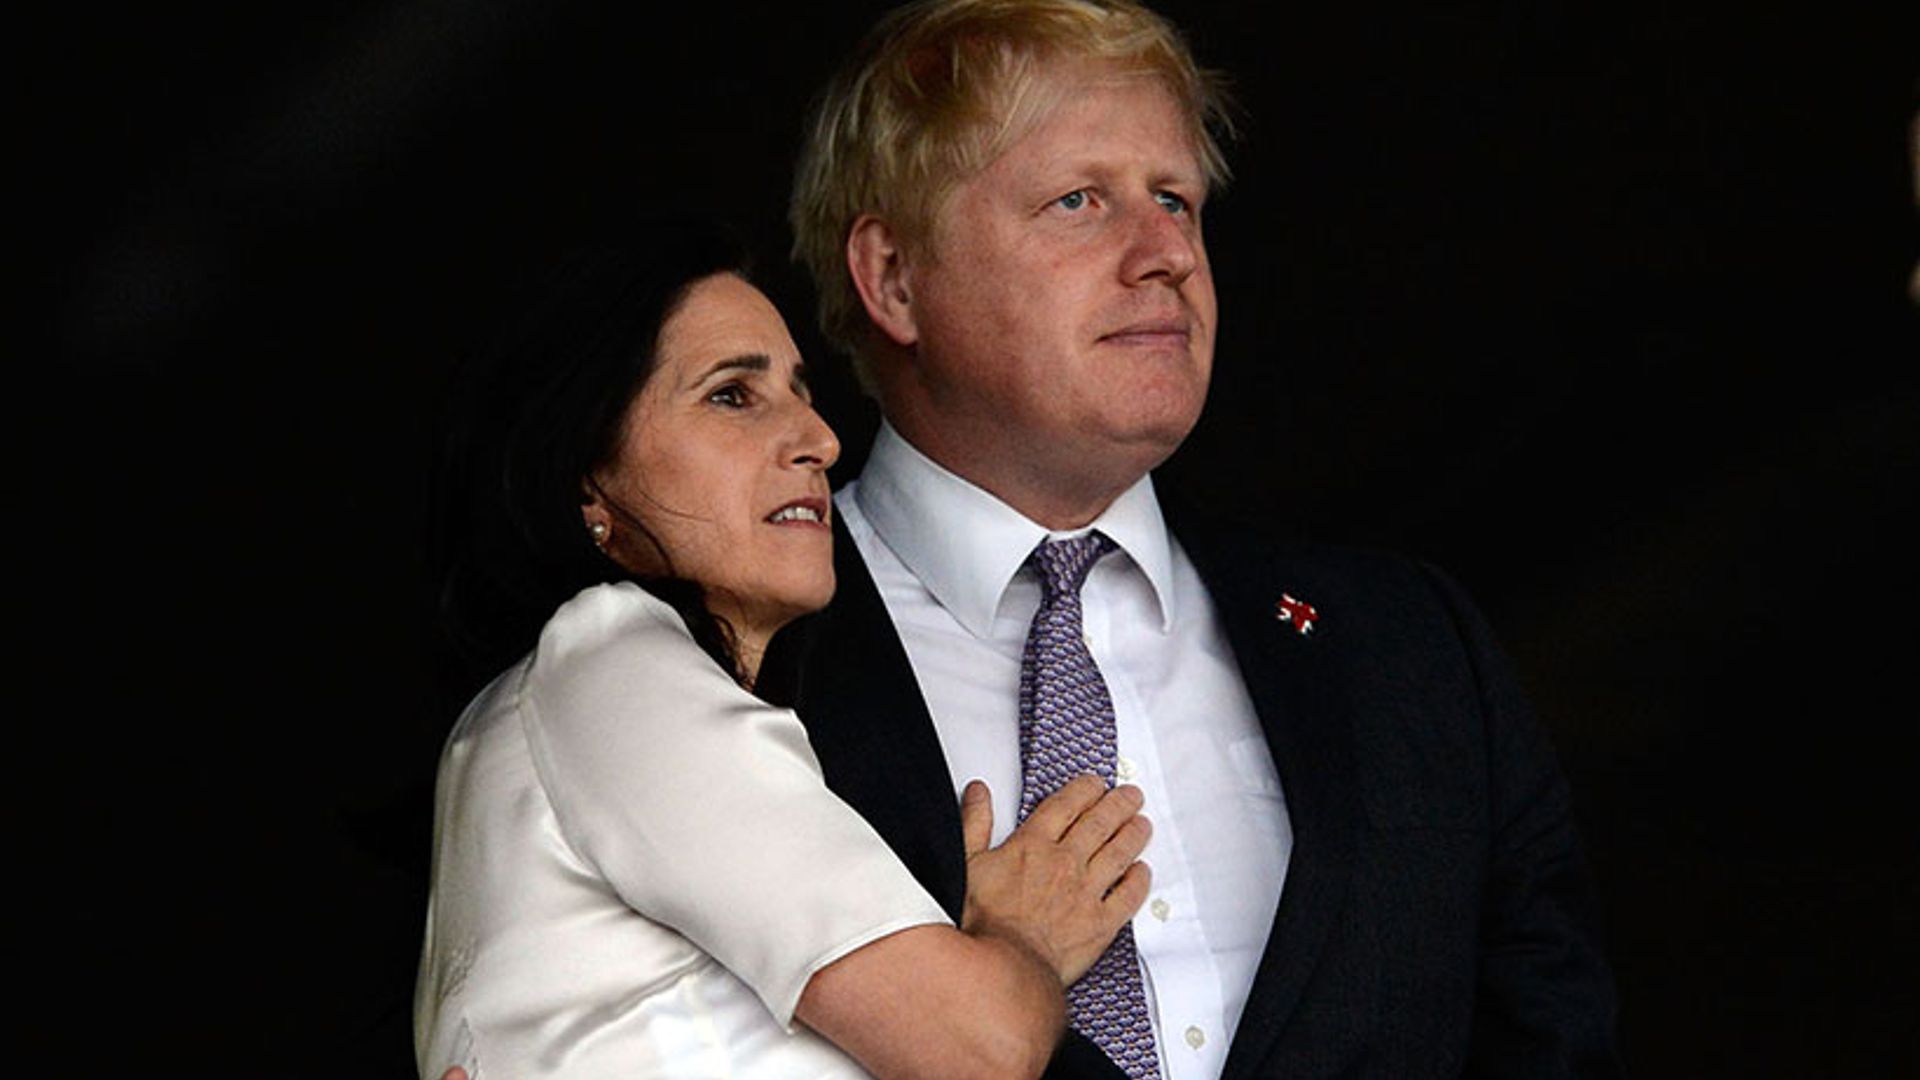 Boris Johnson And Wife Marina Wheeler Divorcing After 25 Years Hello